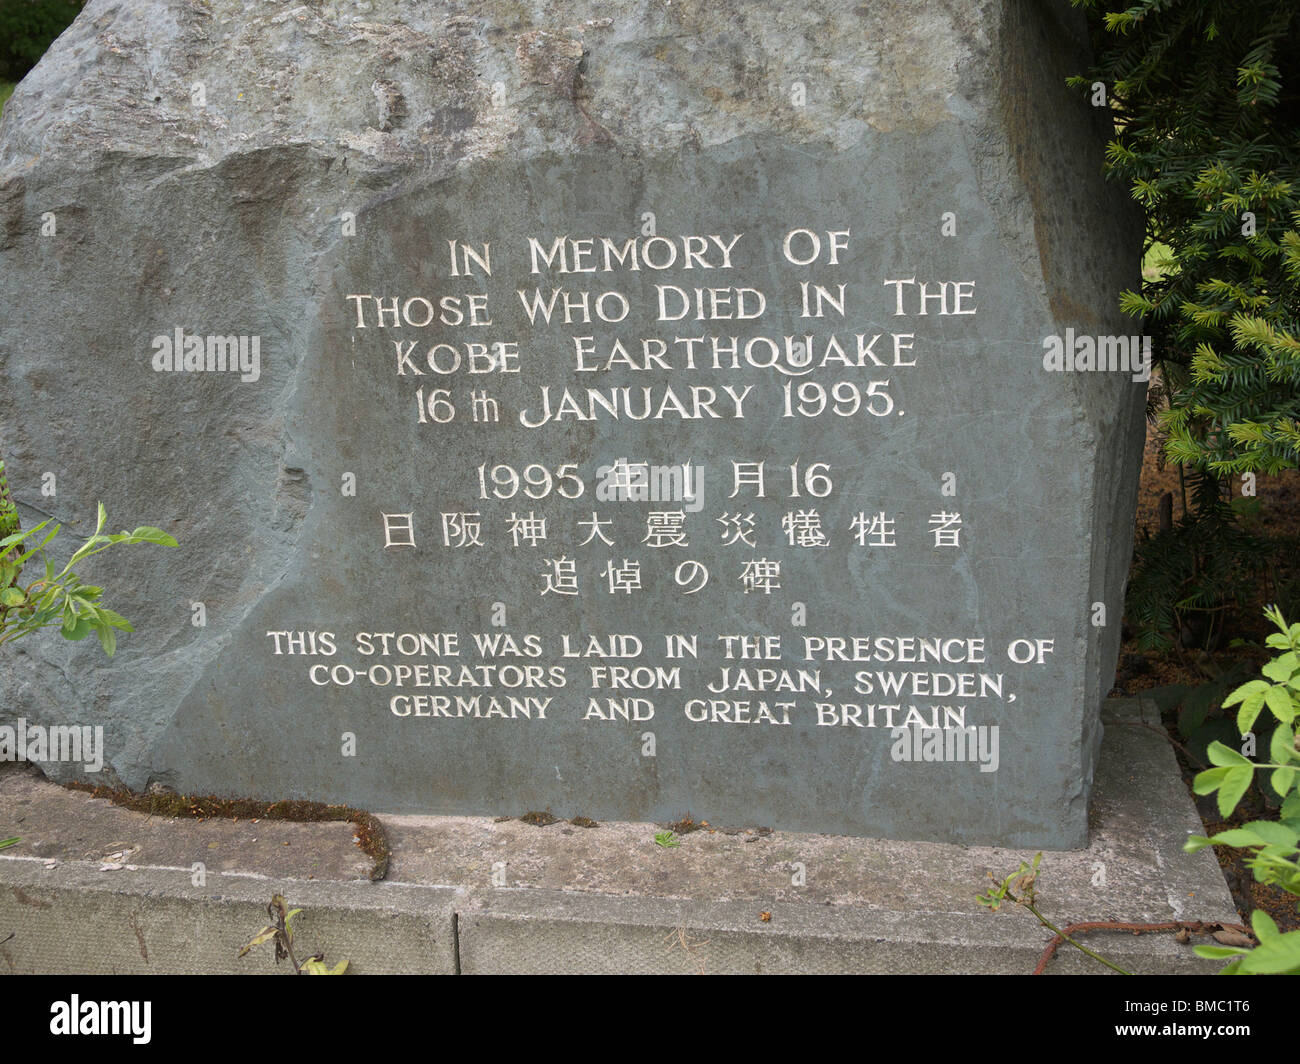 Memorial stone of the Kobe Earthquake 16th January 1995.  Toad Lane, Rochdale,Lancashire,England, UK. Stock Photo